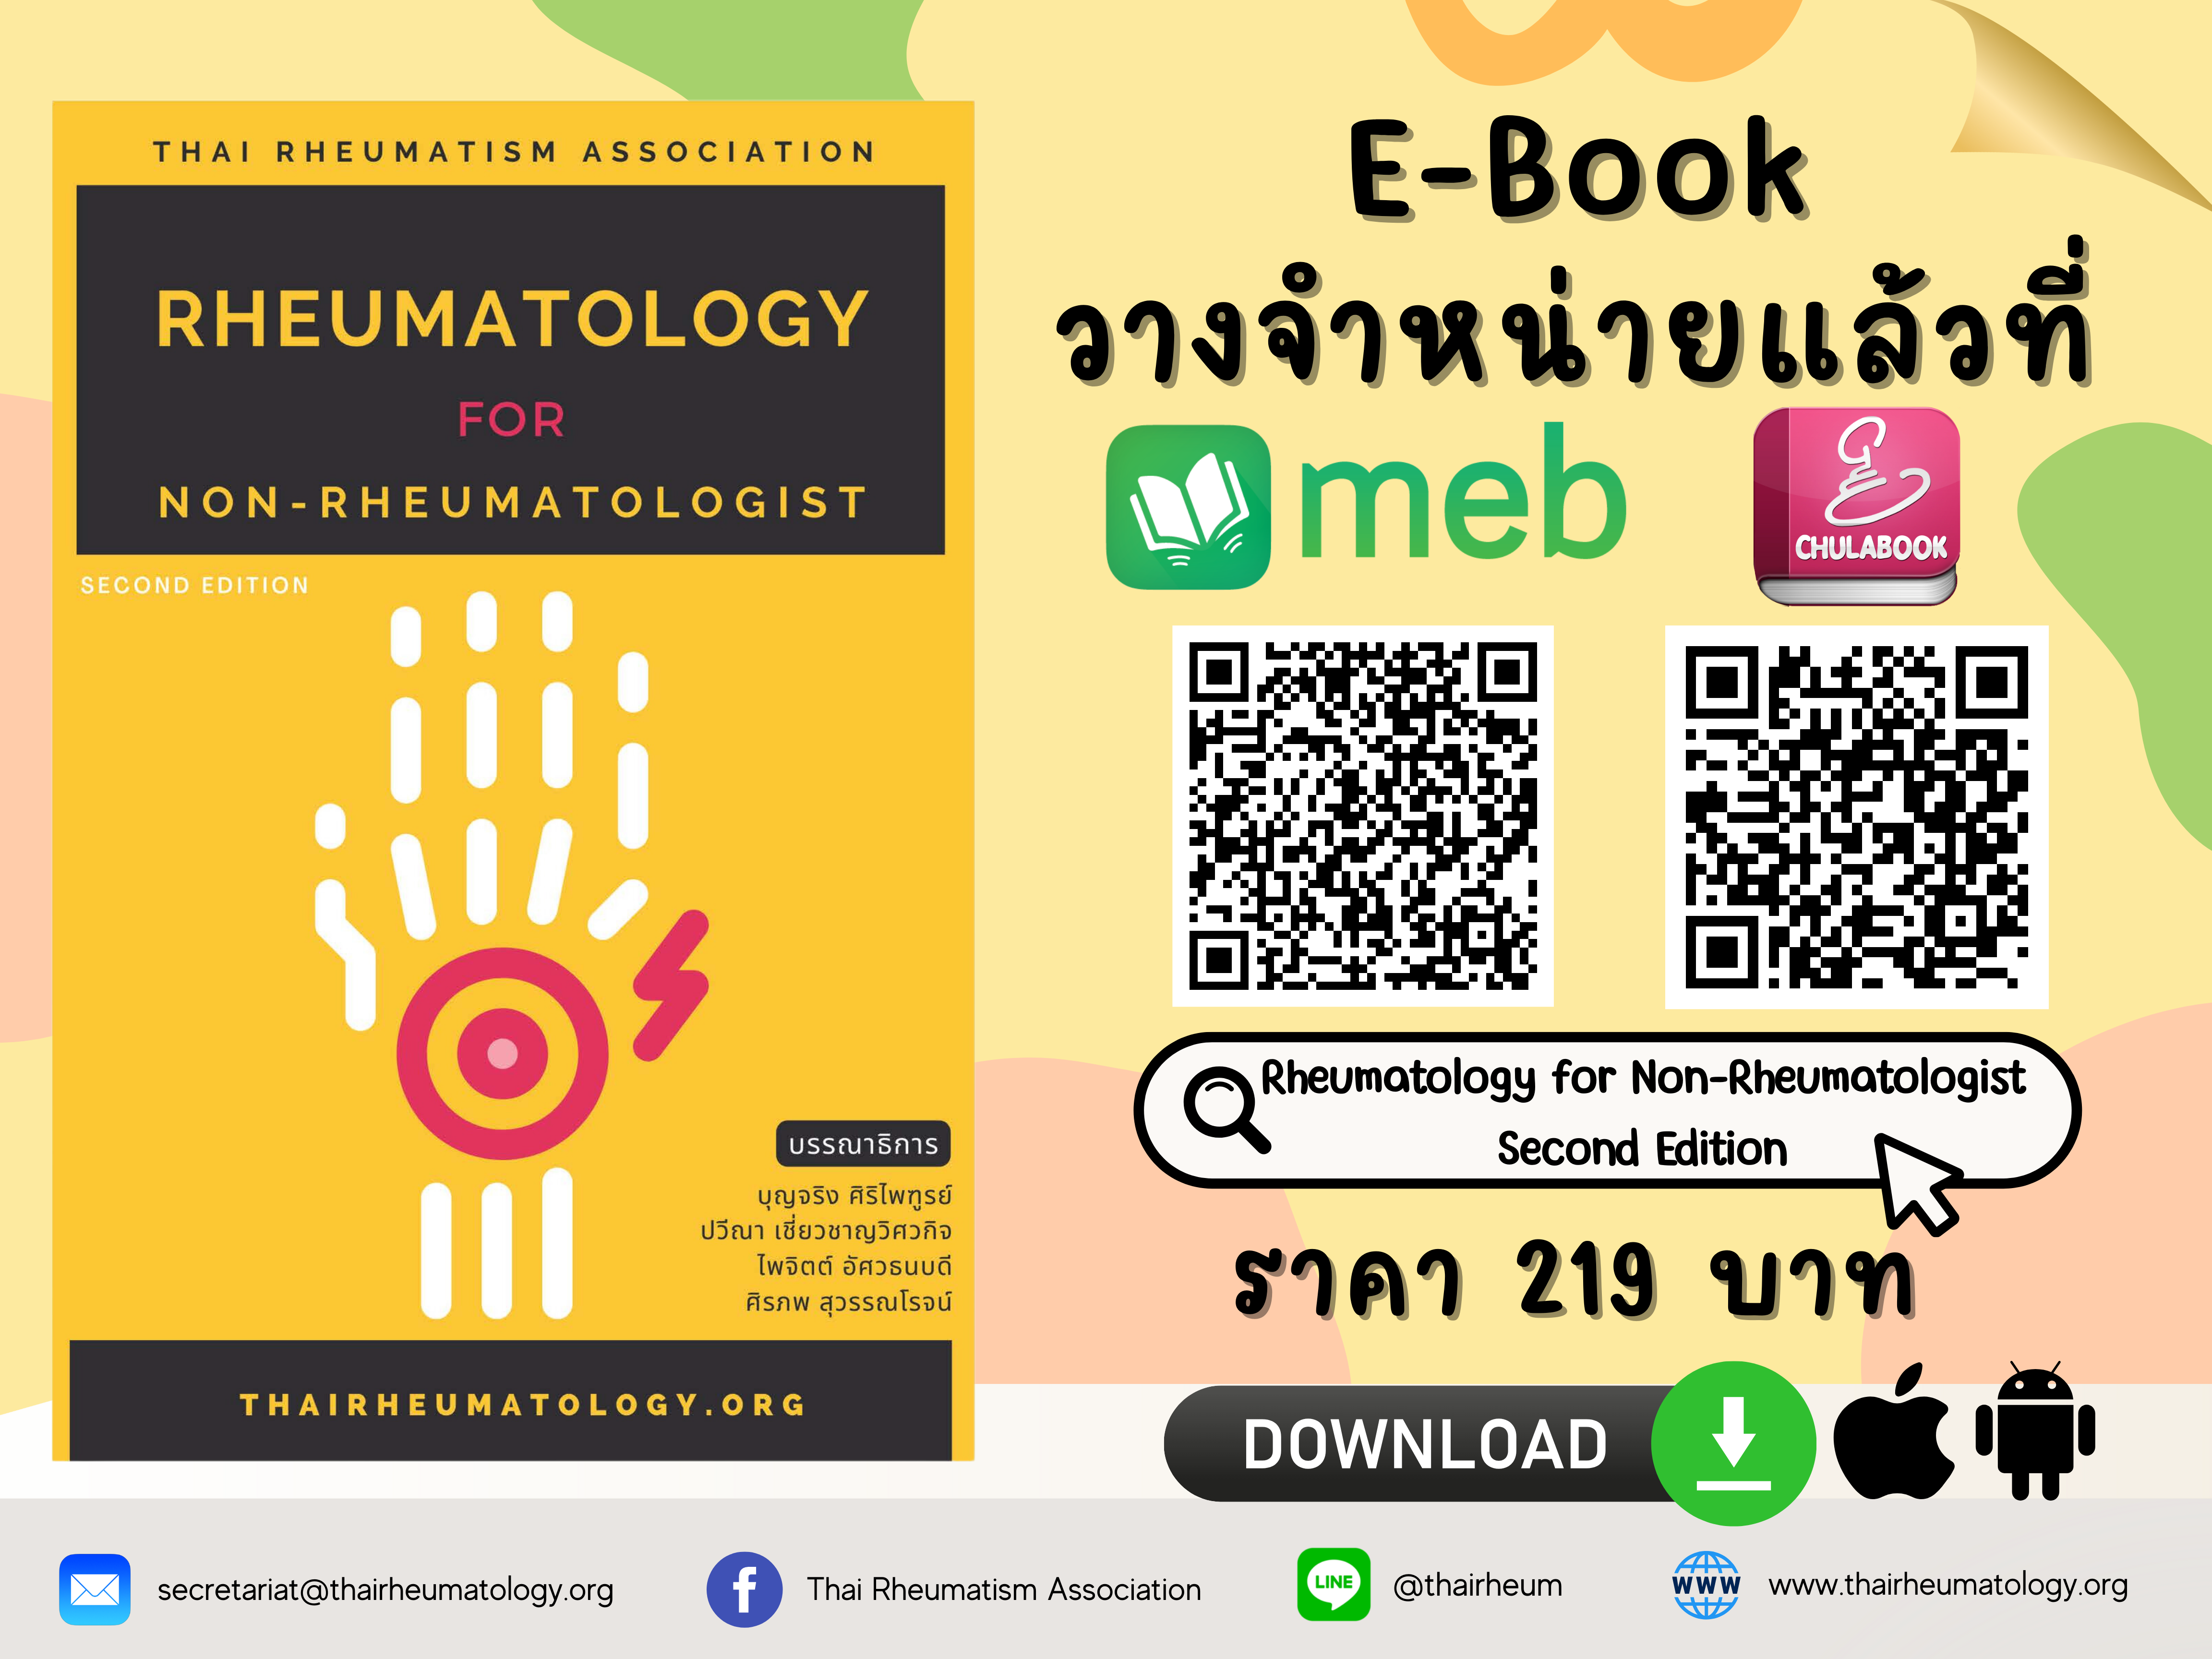 E-Book Rheumatology for Non-Rheumatologist Second Edition